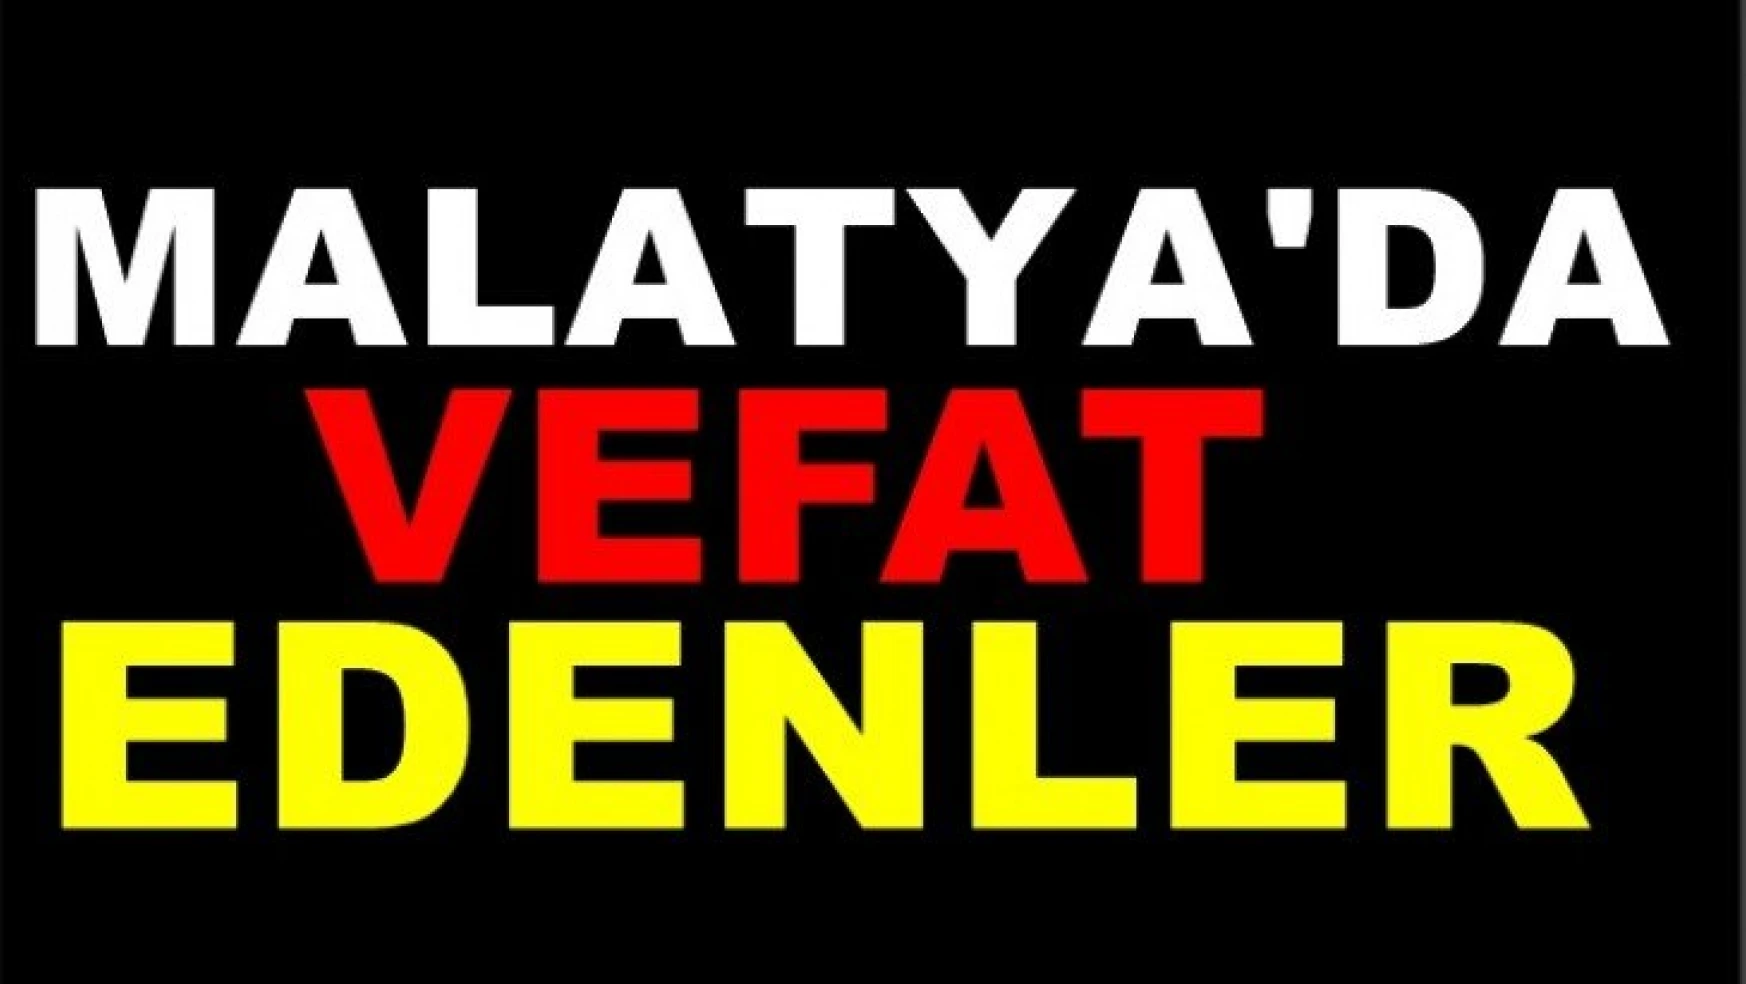 Malatya'da Bayramın ilk Gününde 10 kişi vefat etti